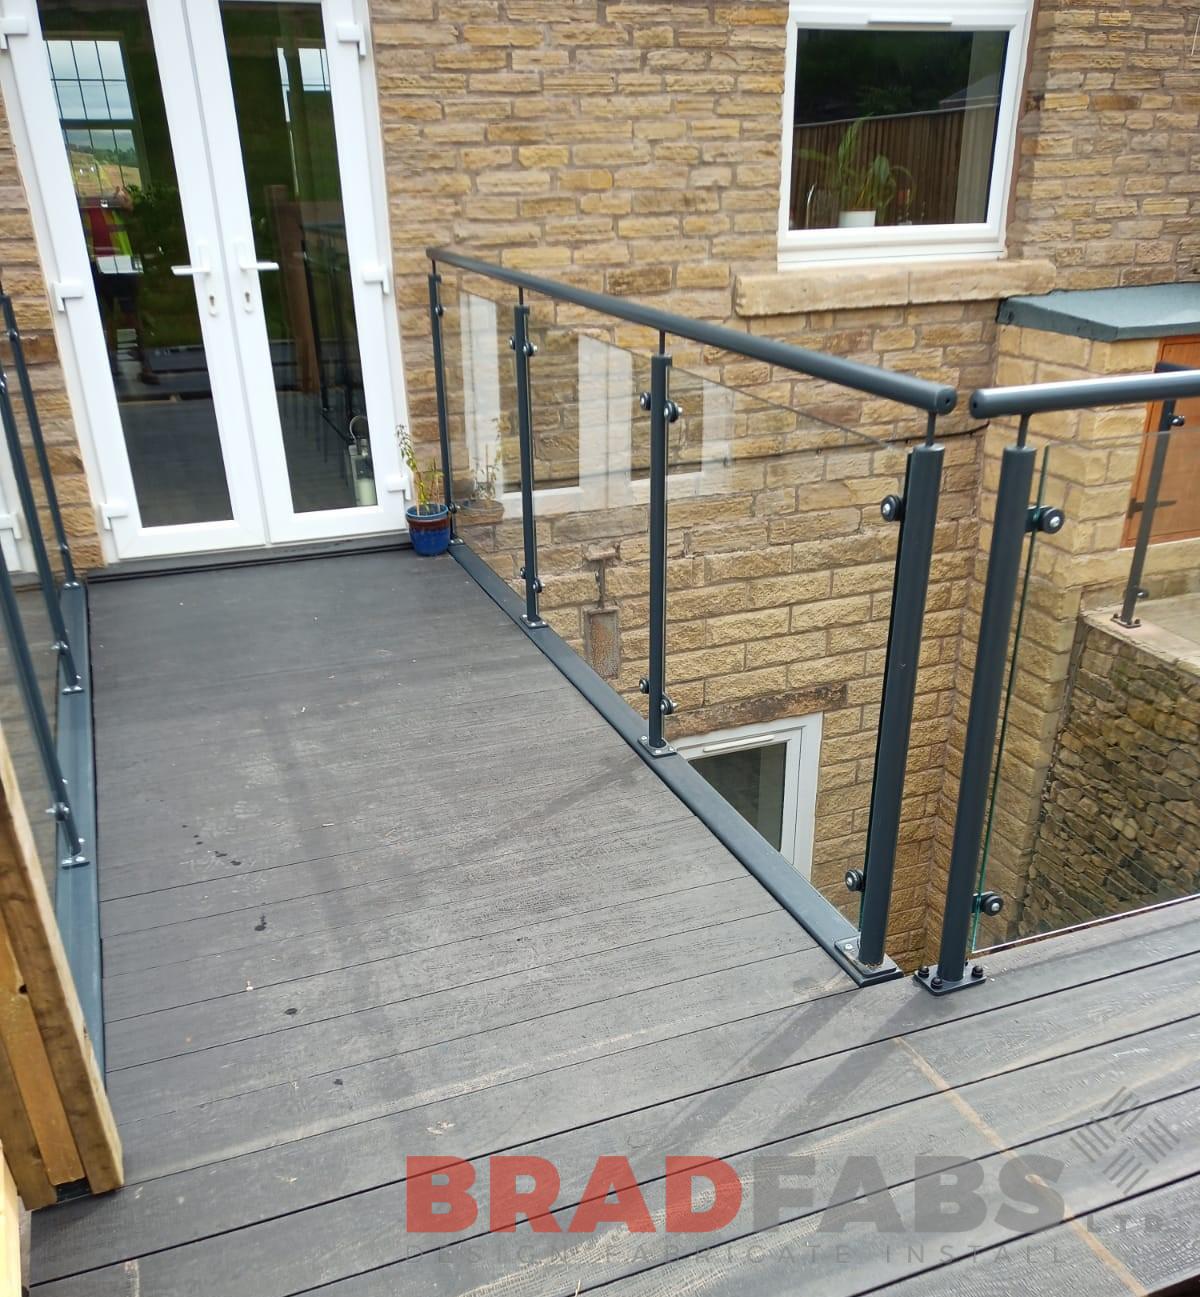 Bradfabs, bridges, mild steel and glass balustrade, composite decking 